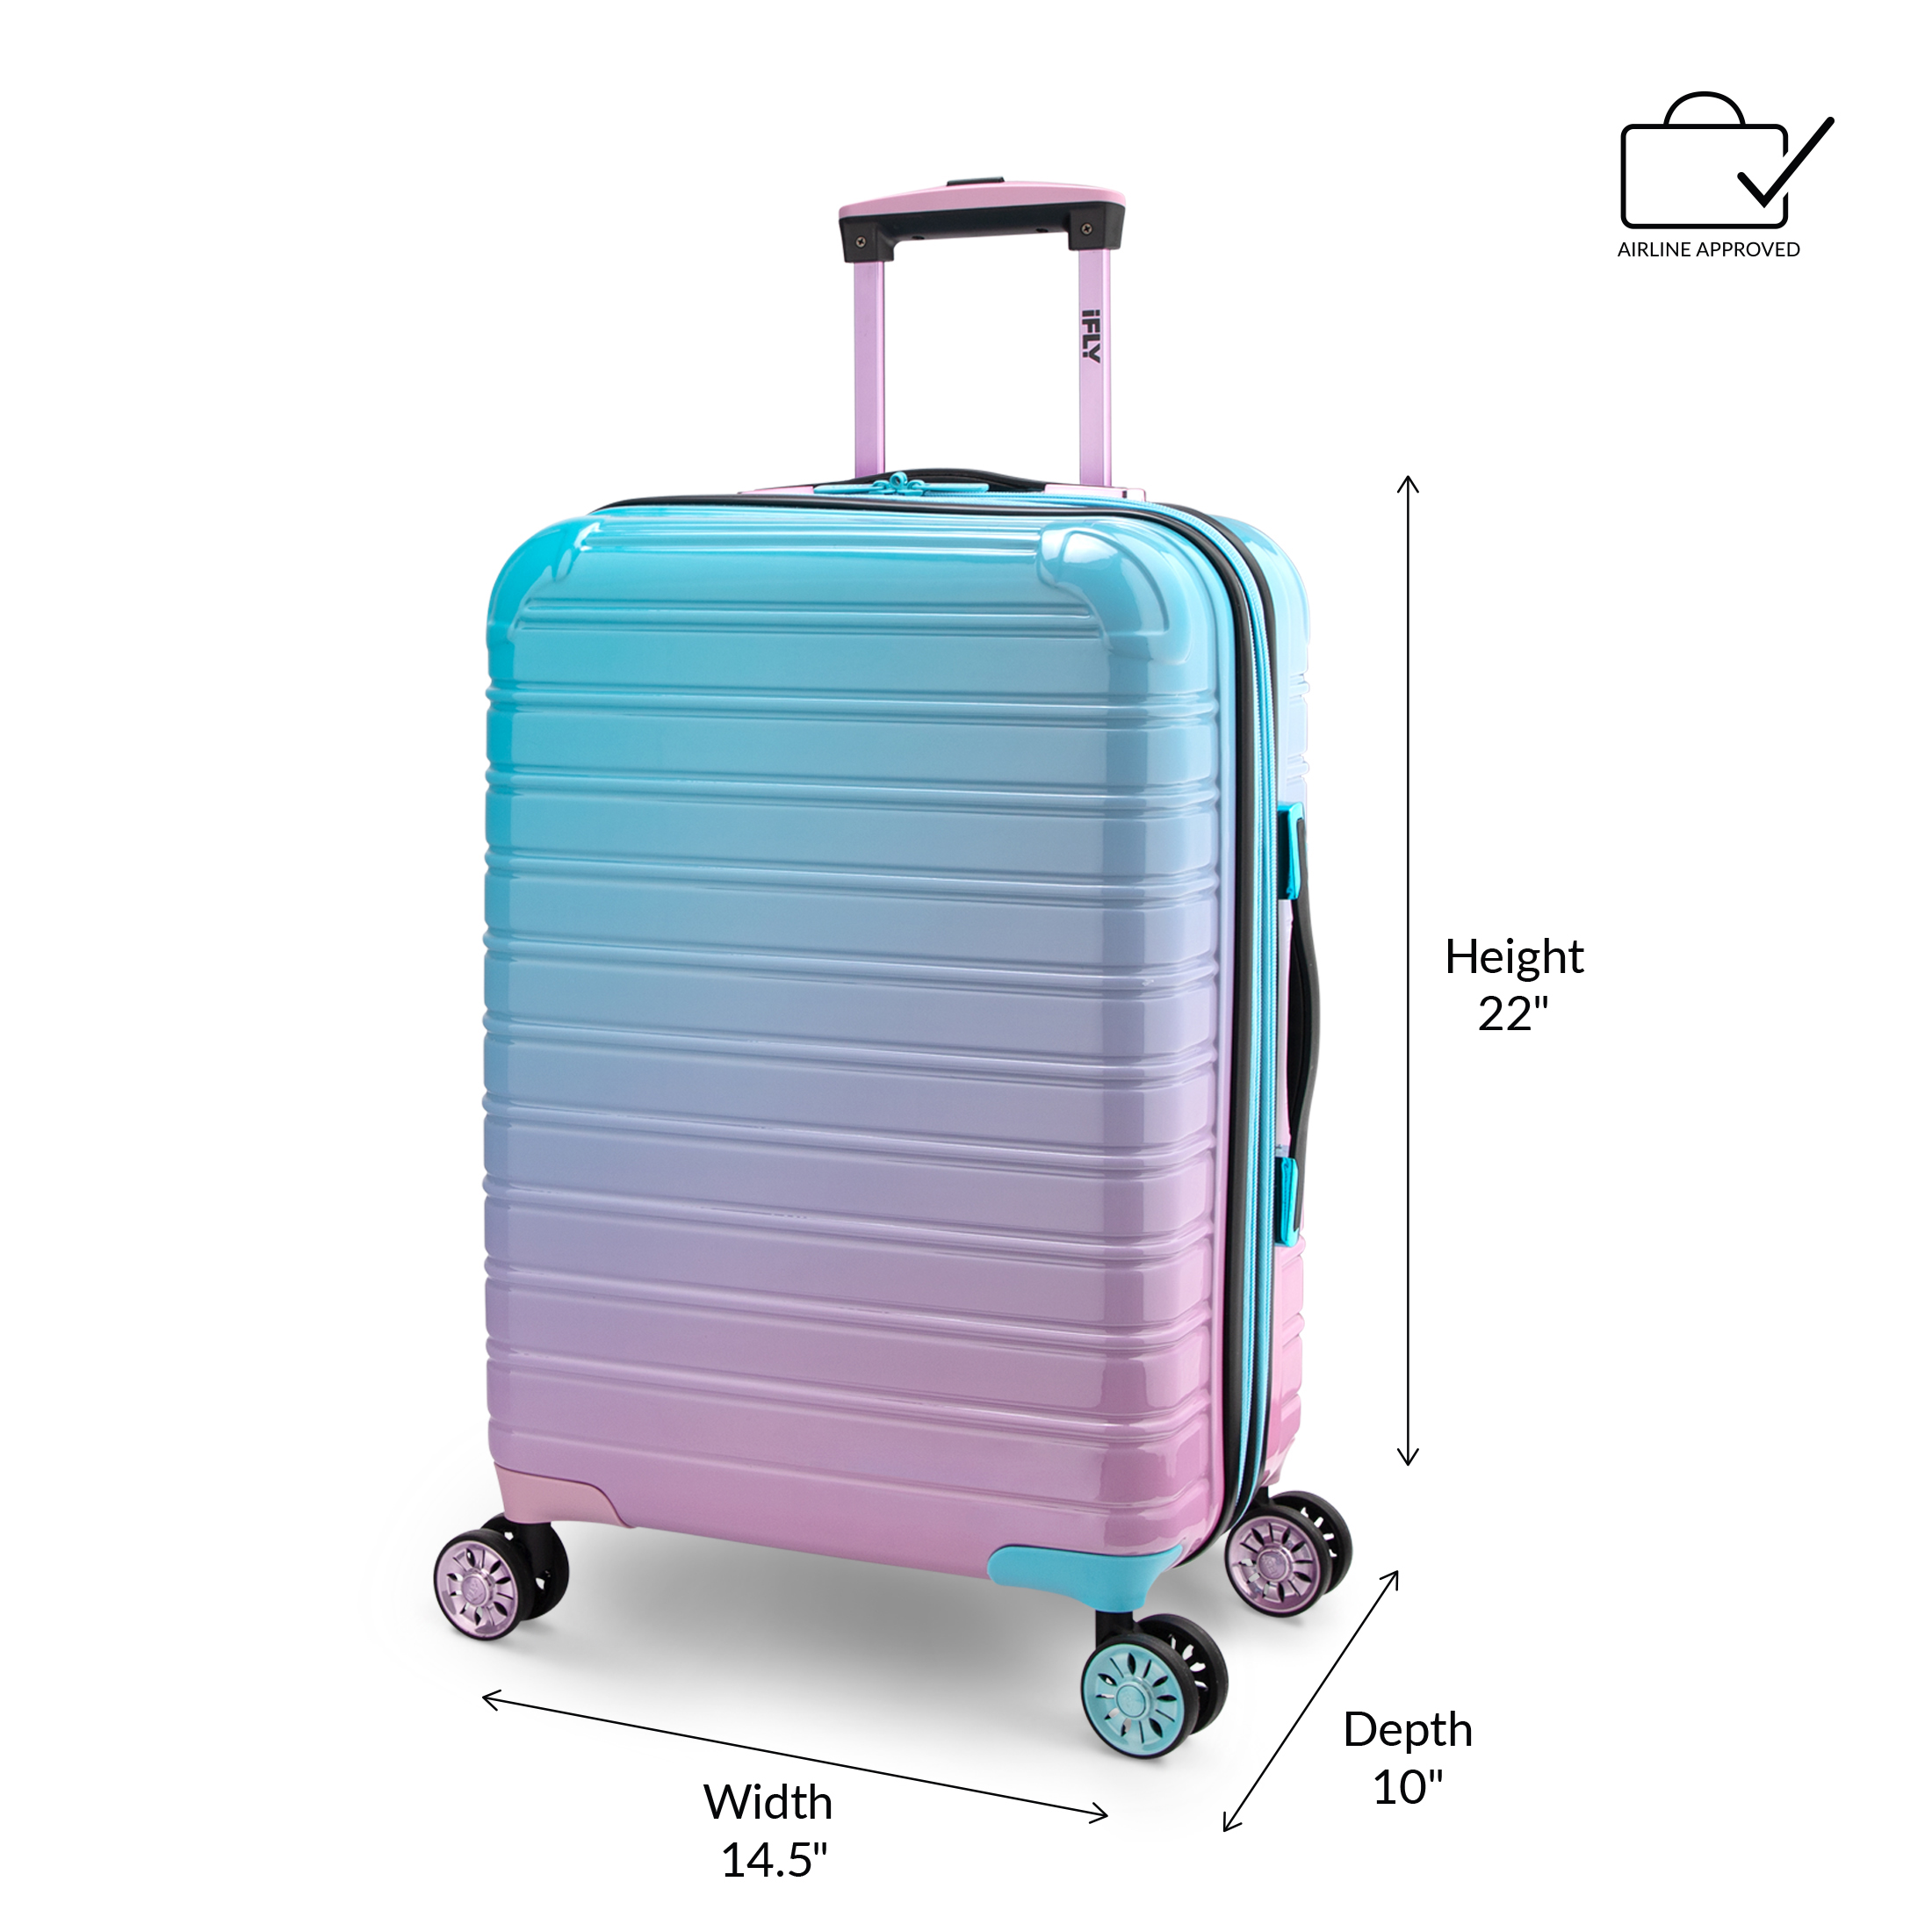 iFLY Hardside Luggage Fibertech 3 Piece Set, 20" Carry-on Luggage, 24" Checked Luggage and 28" Checked Luggage, Cotton Candy - image 2 of 12